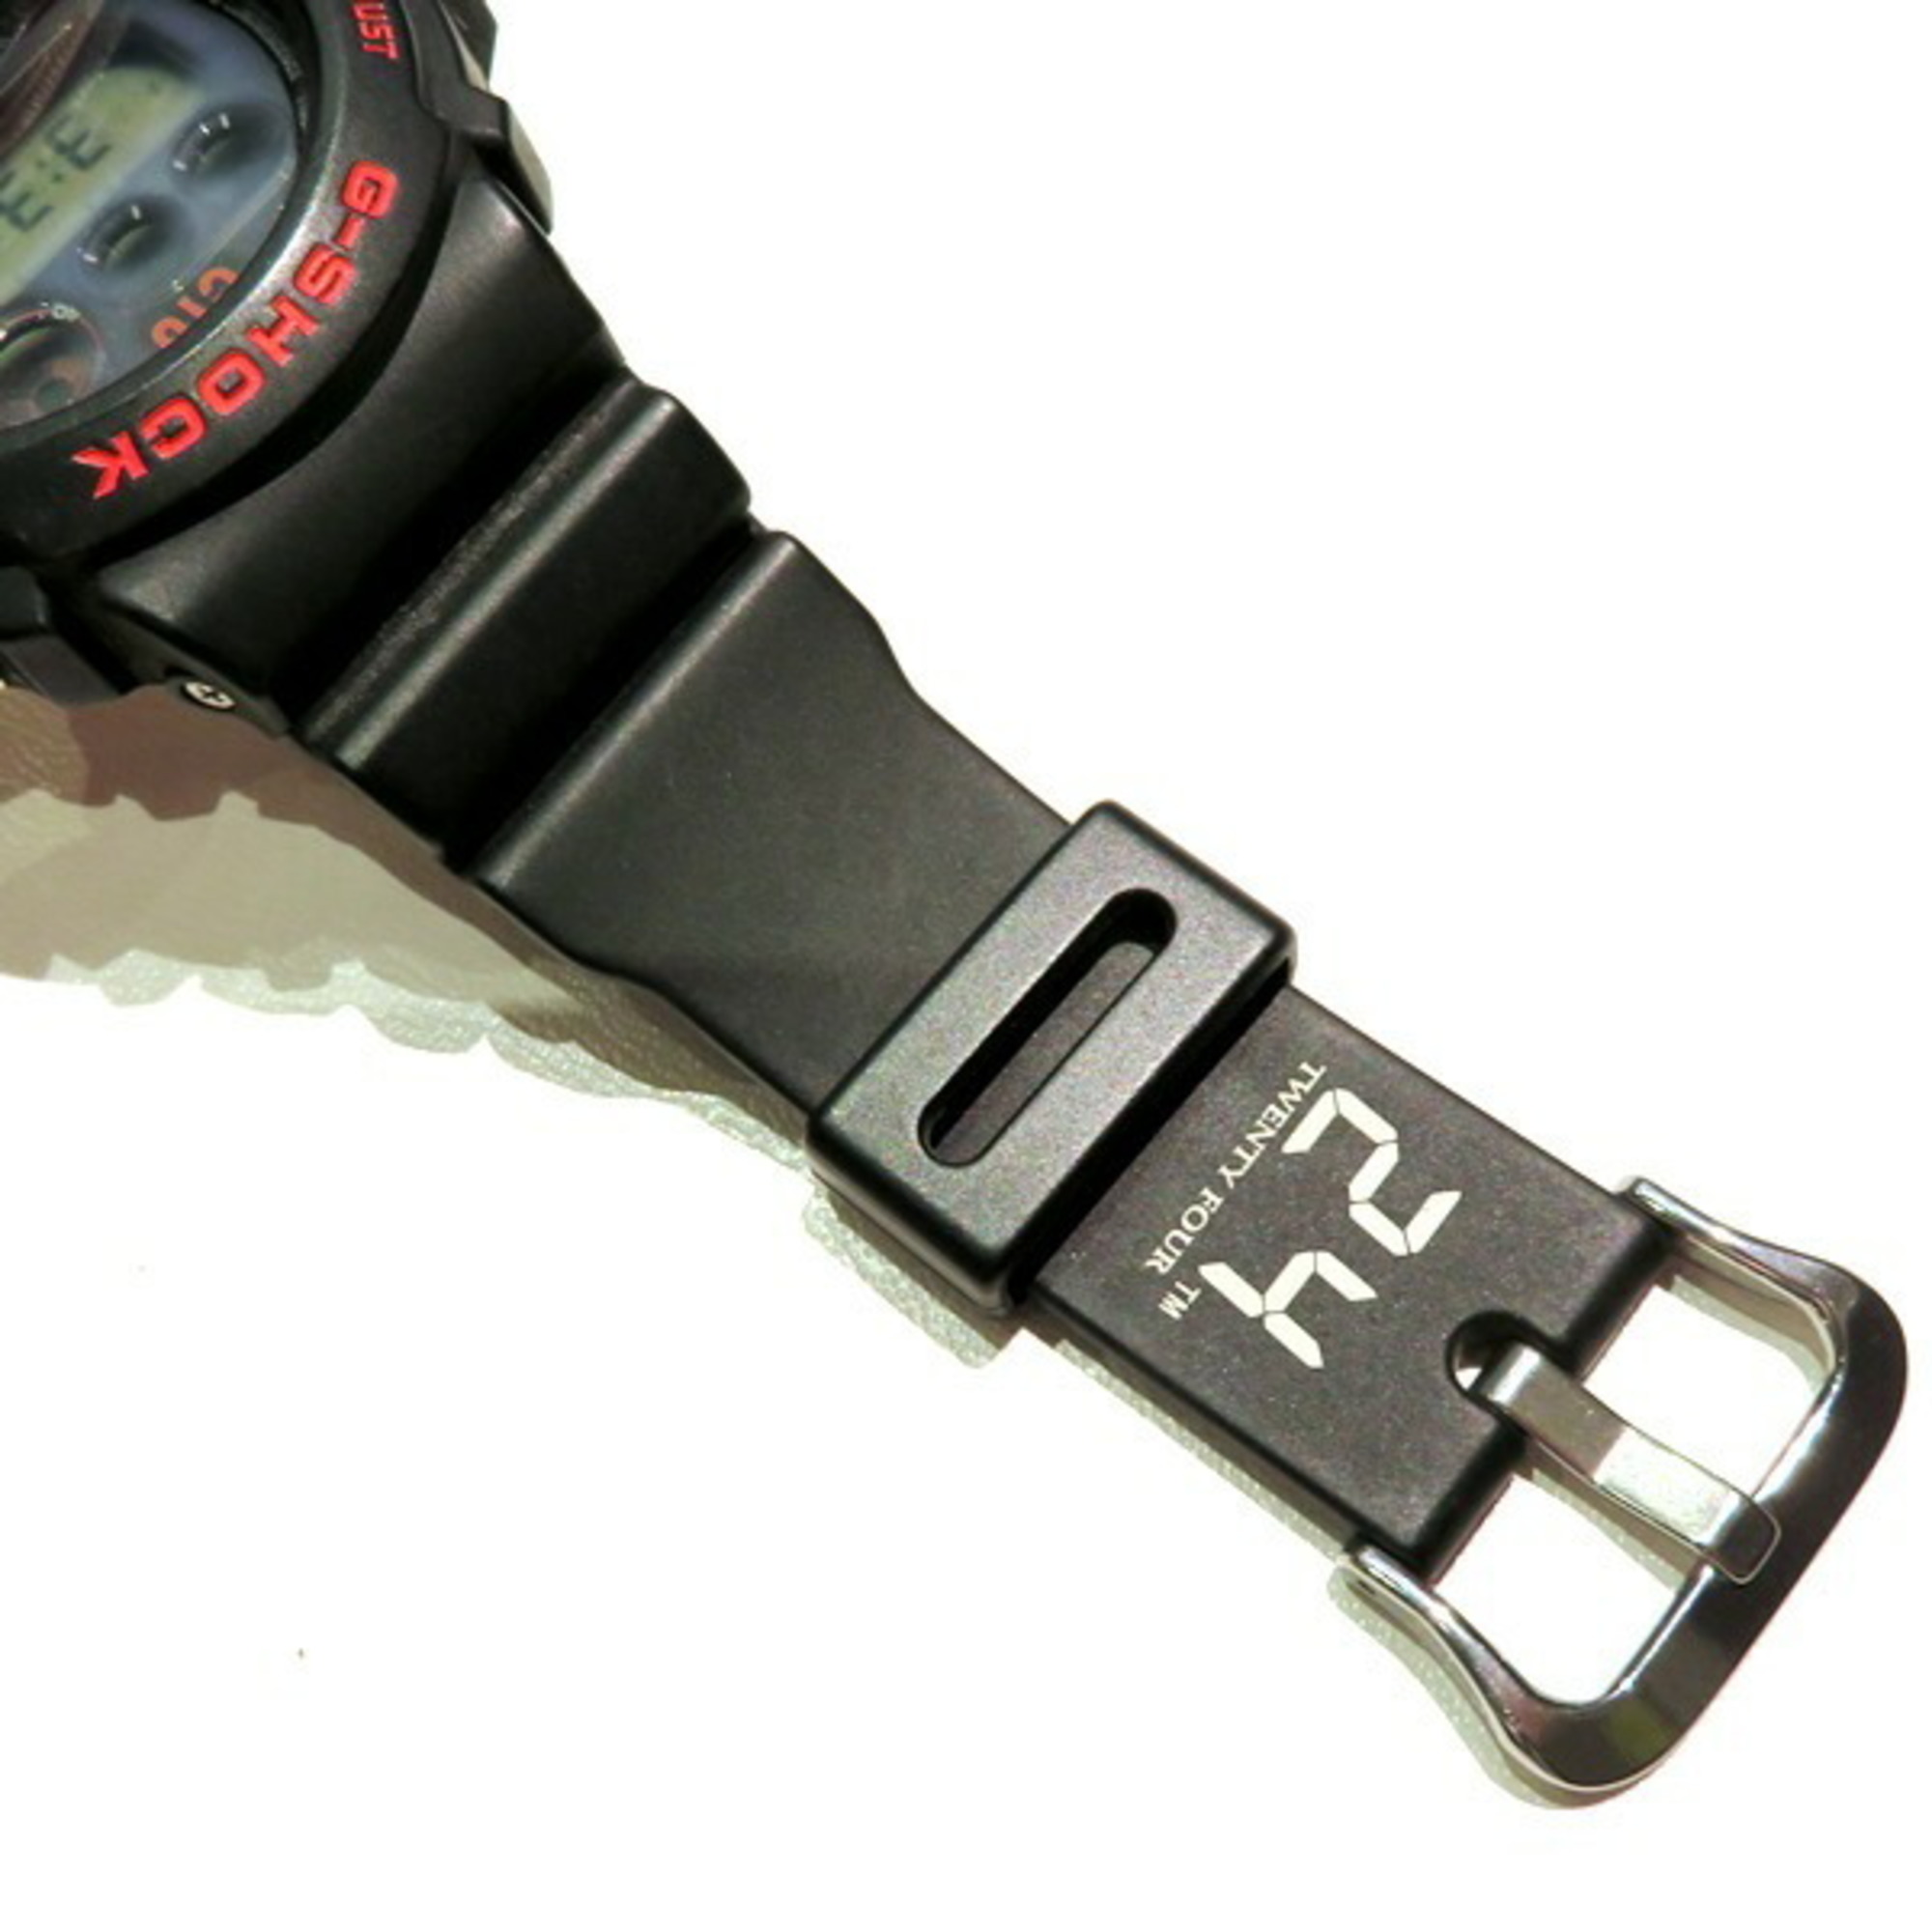 Casio 24 CTU Special Agent G-Shock DW6900FS Quartz Watch Men's